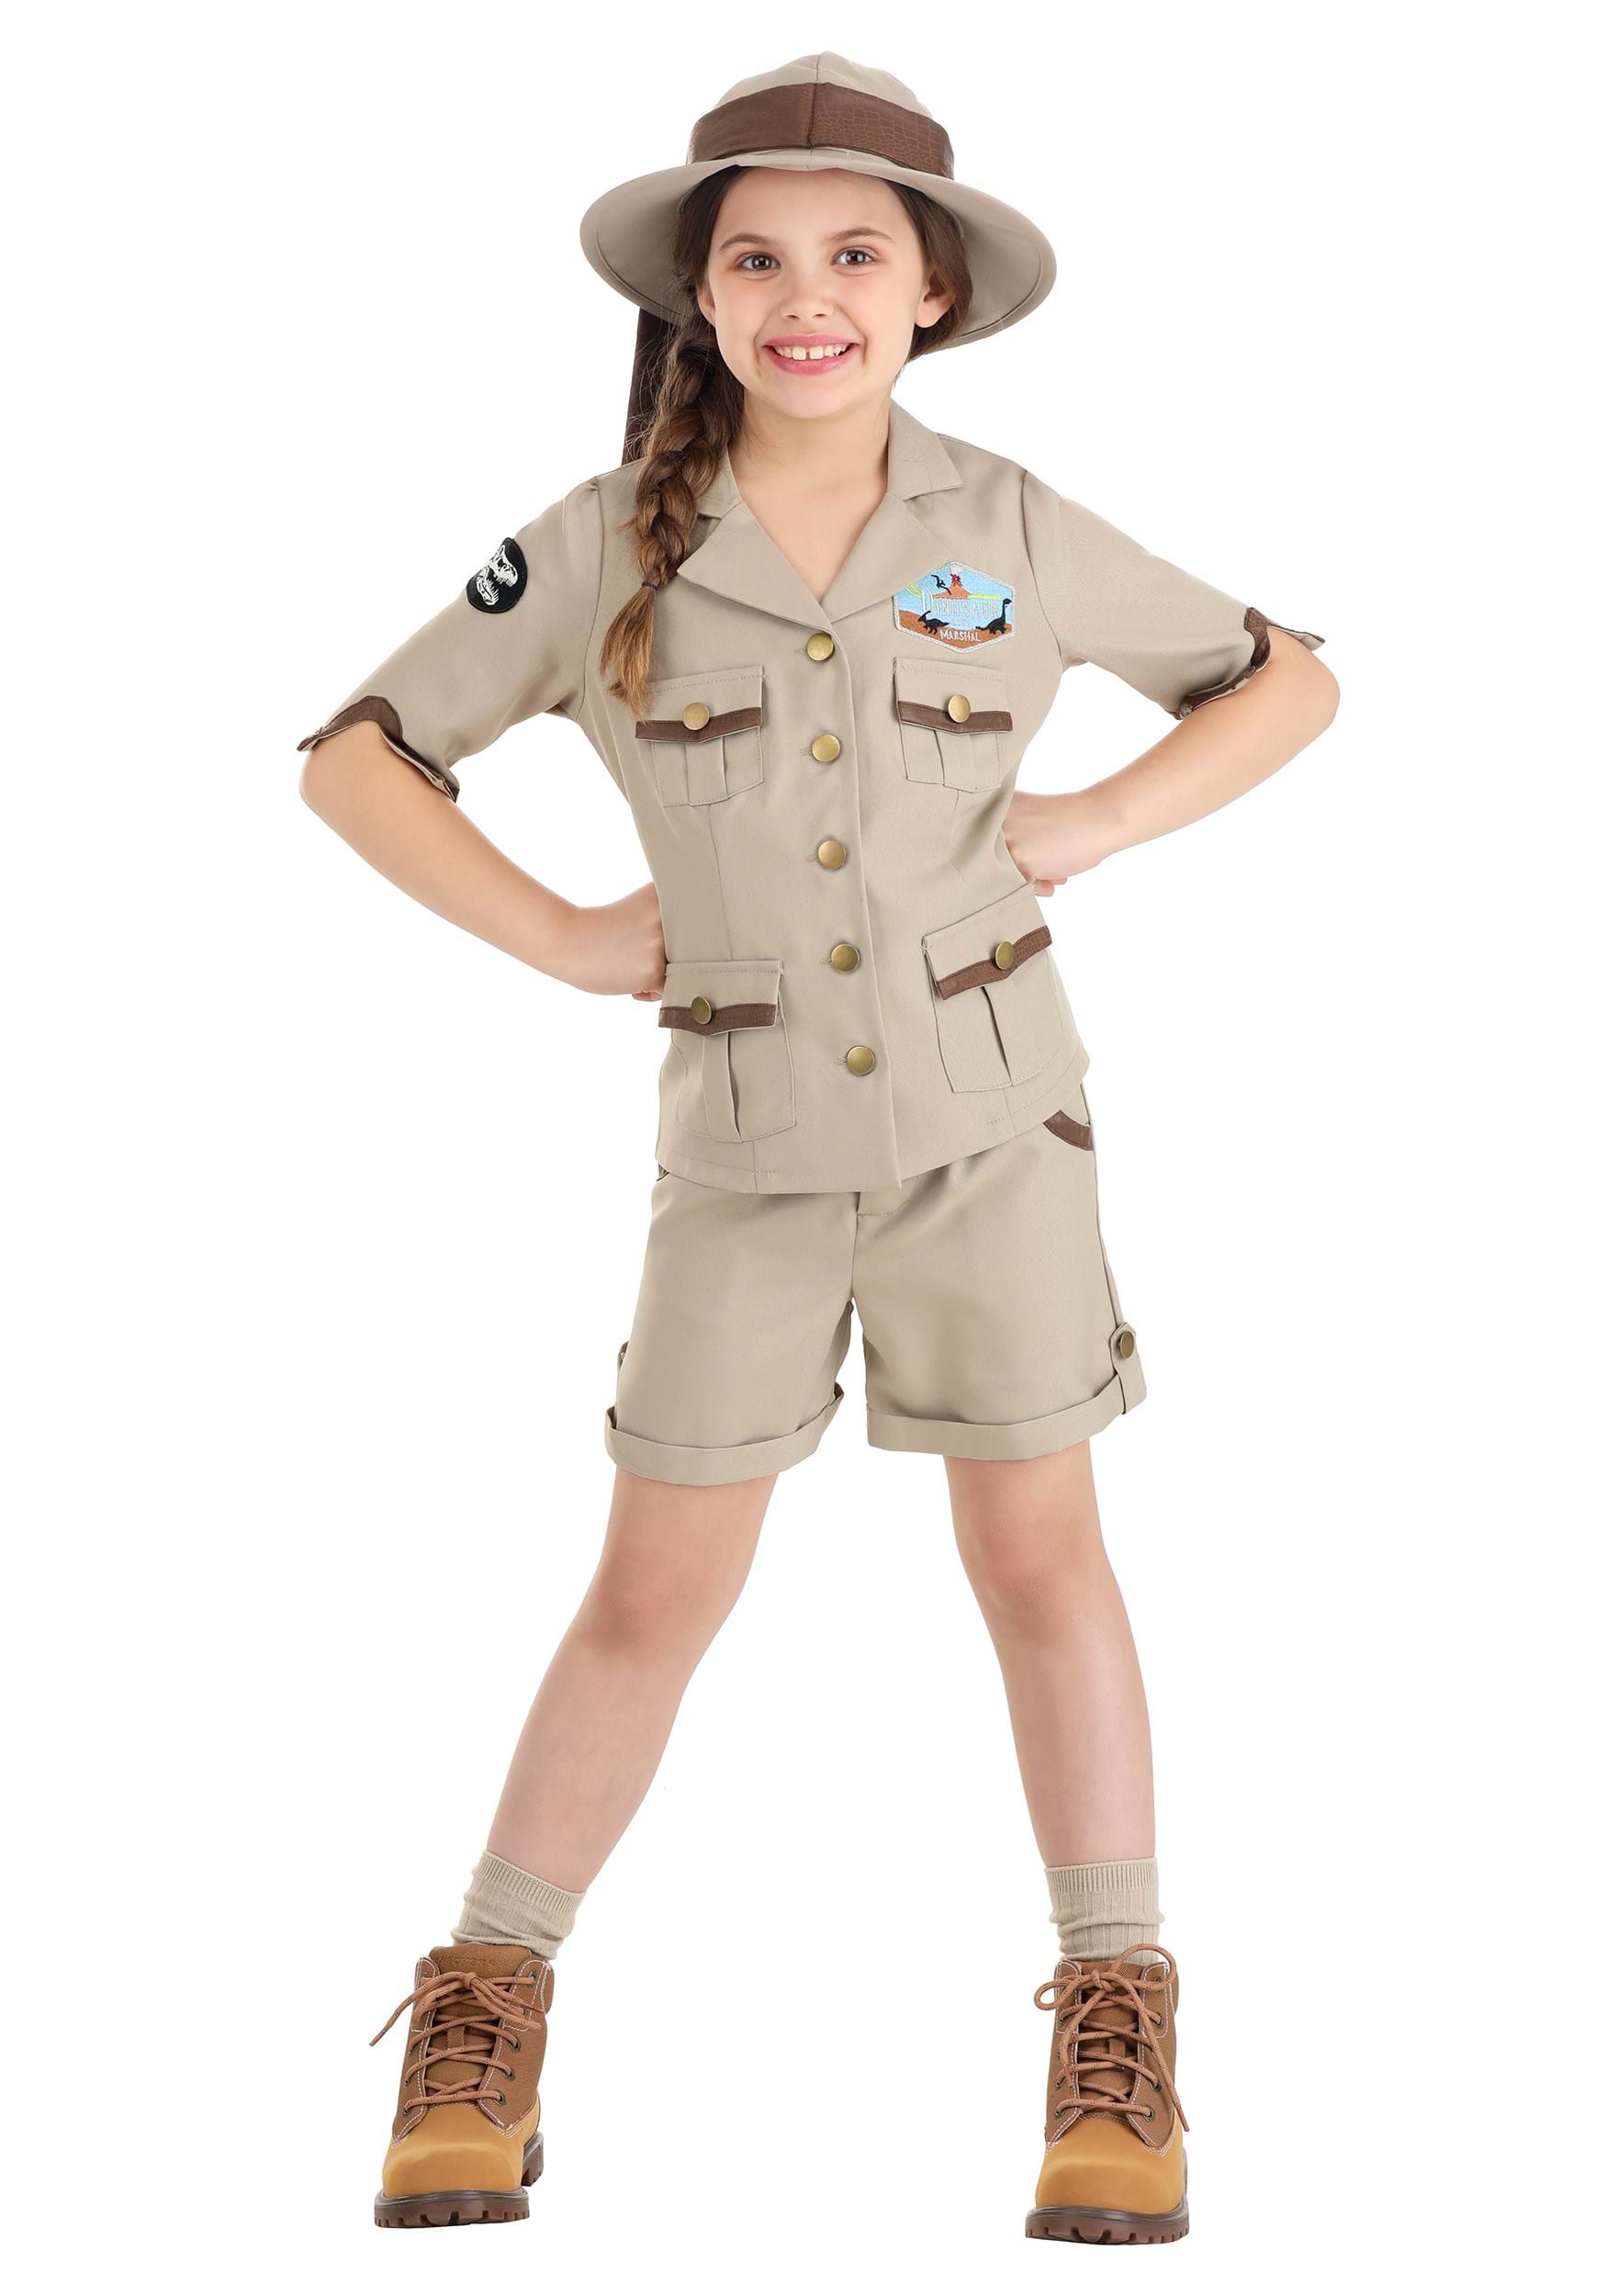 Paleontologist Costume For Kid's